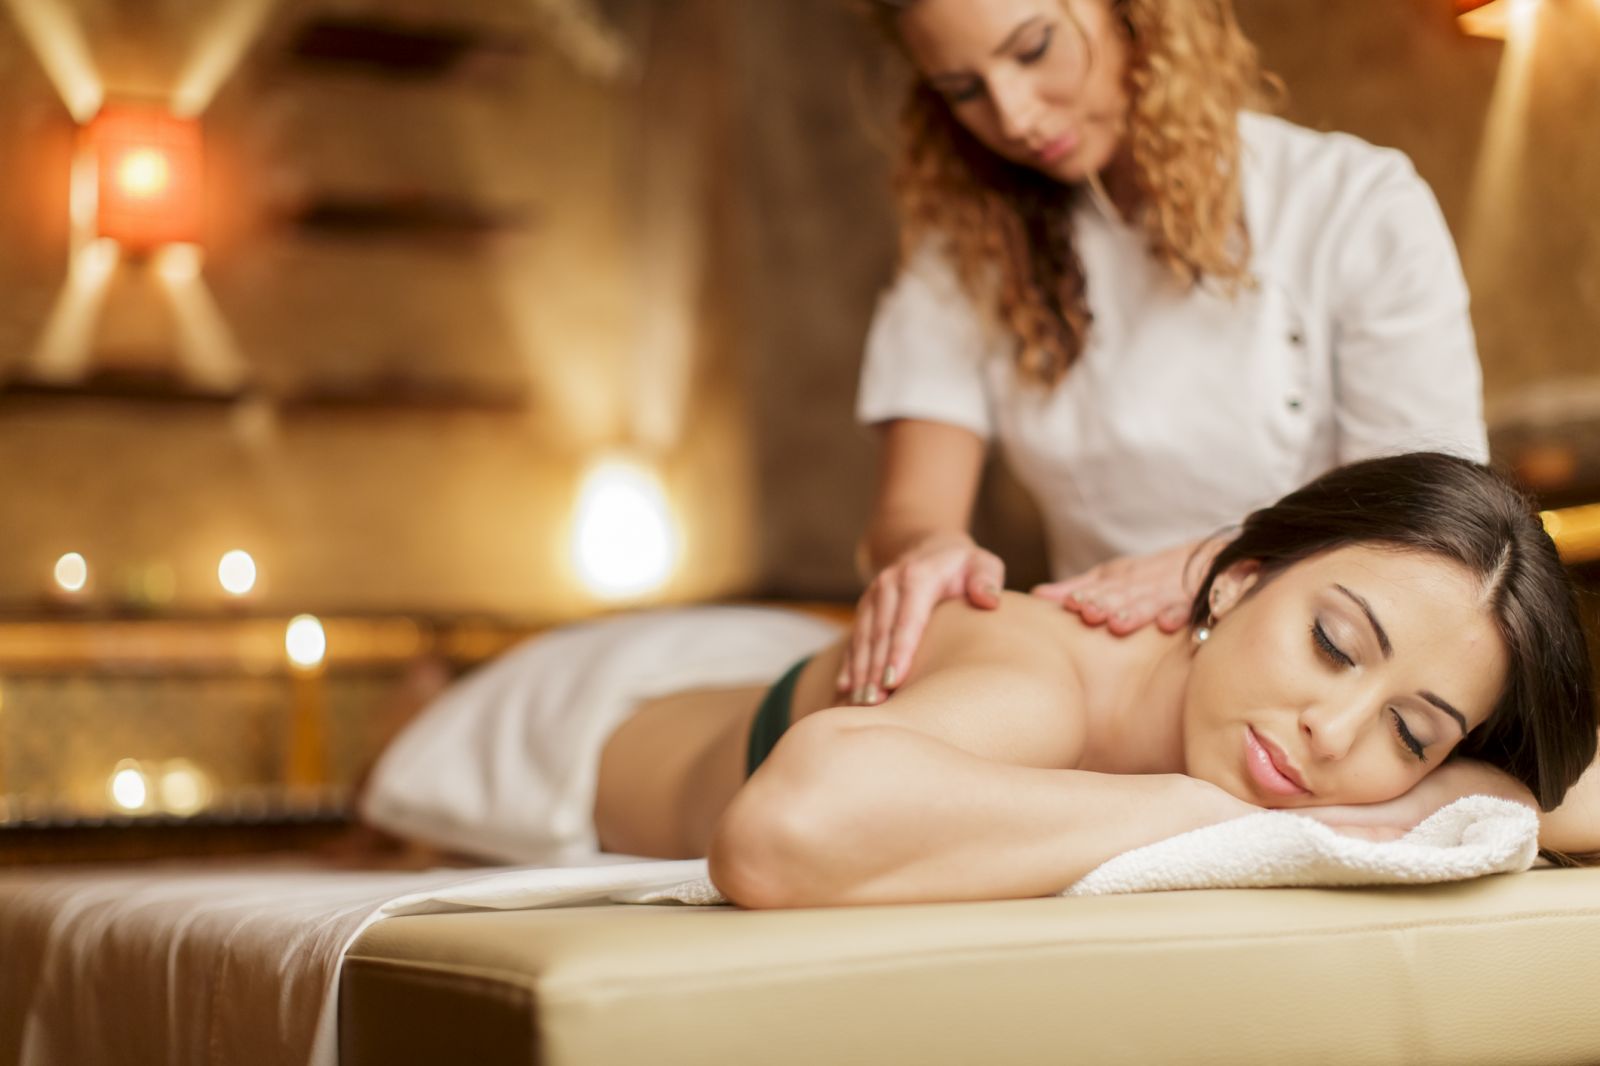 unlicensed massage therapists 